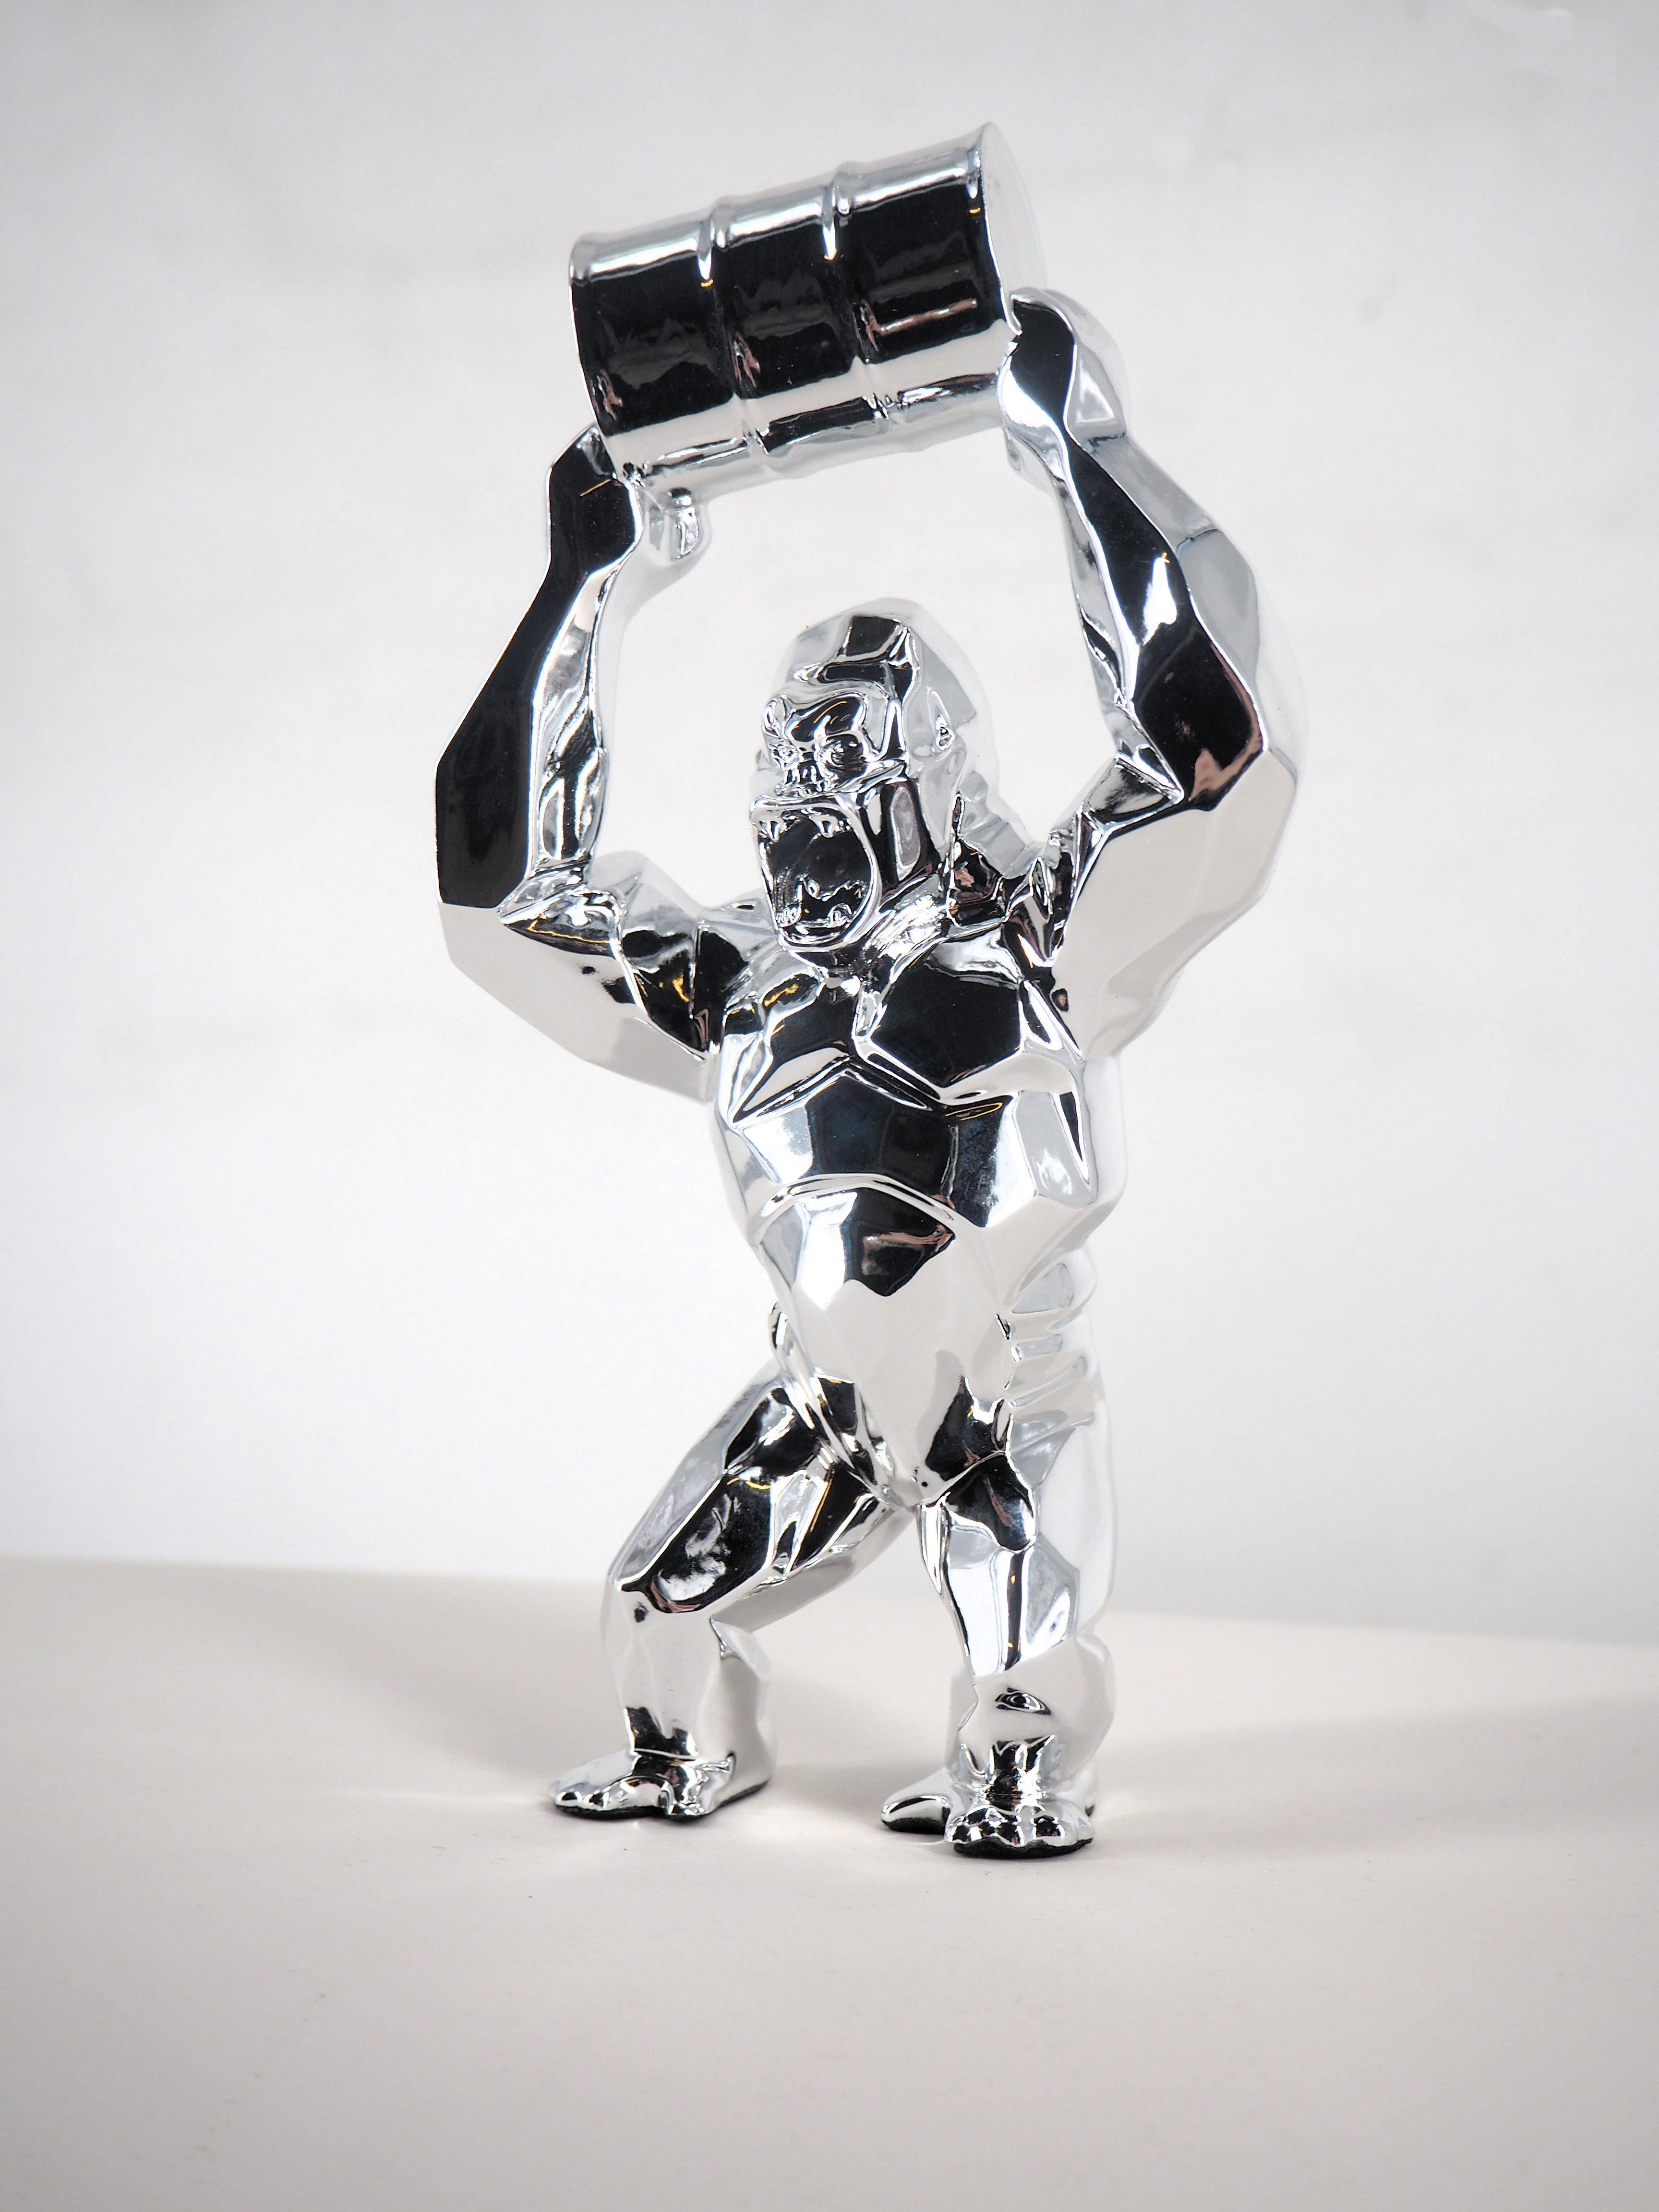 Richard Orlinski Figurative Sculpture - Kong Oil Spirit (Silver edition) - Sculpture in original box with artist coa